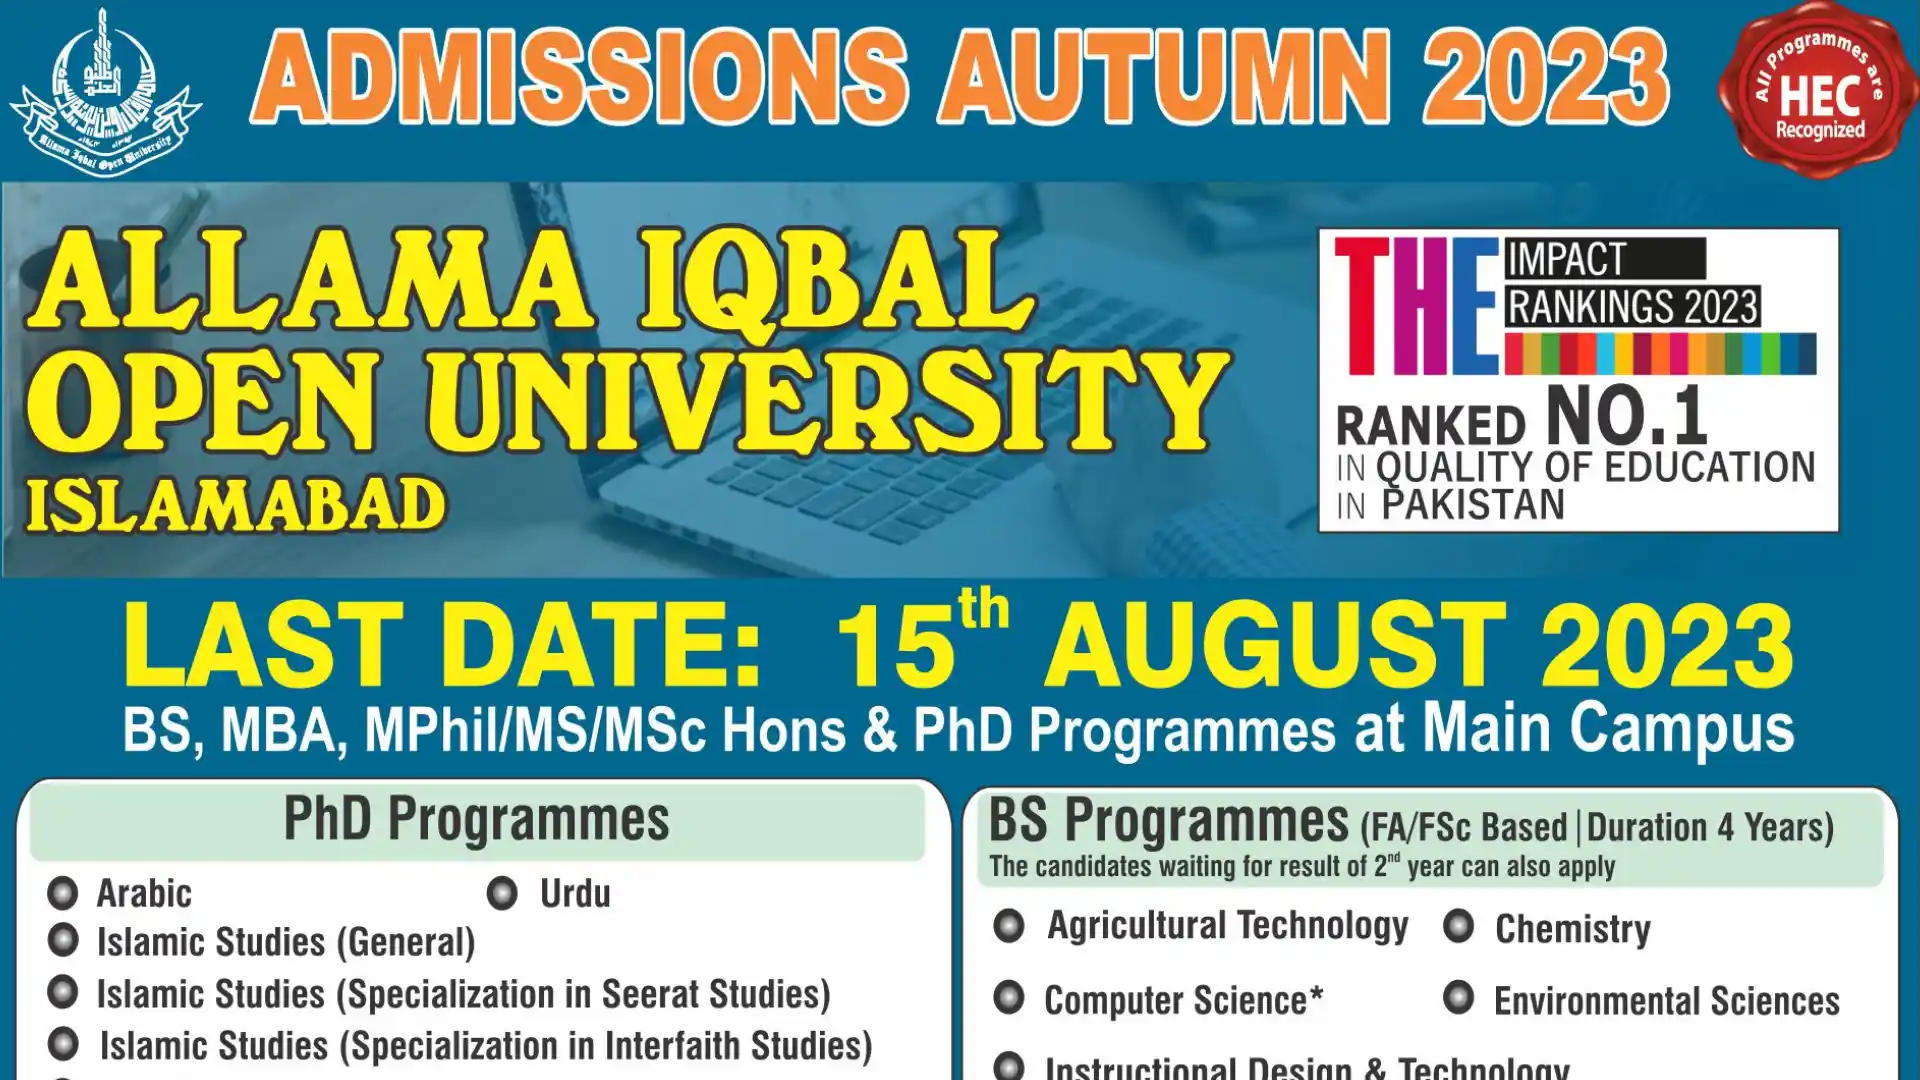 Allama Iqbal Open University 2023 Enrollment